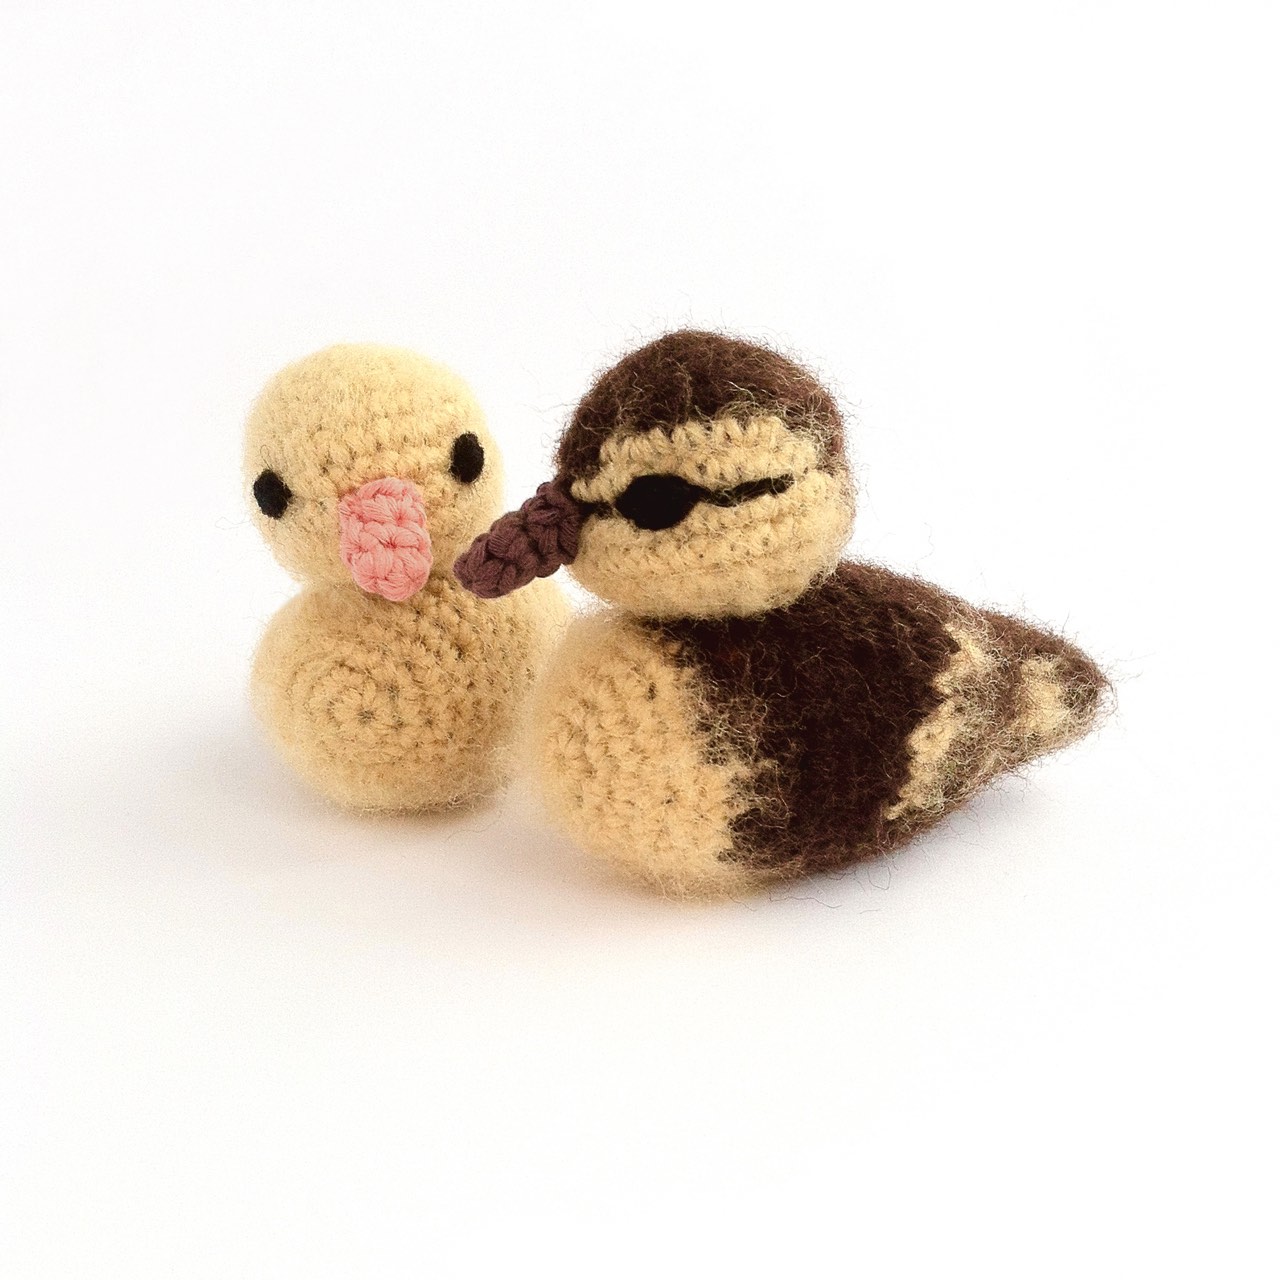 Crocheted Ducklings